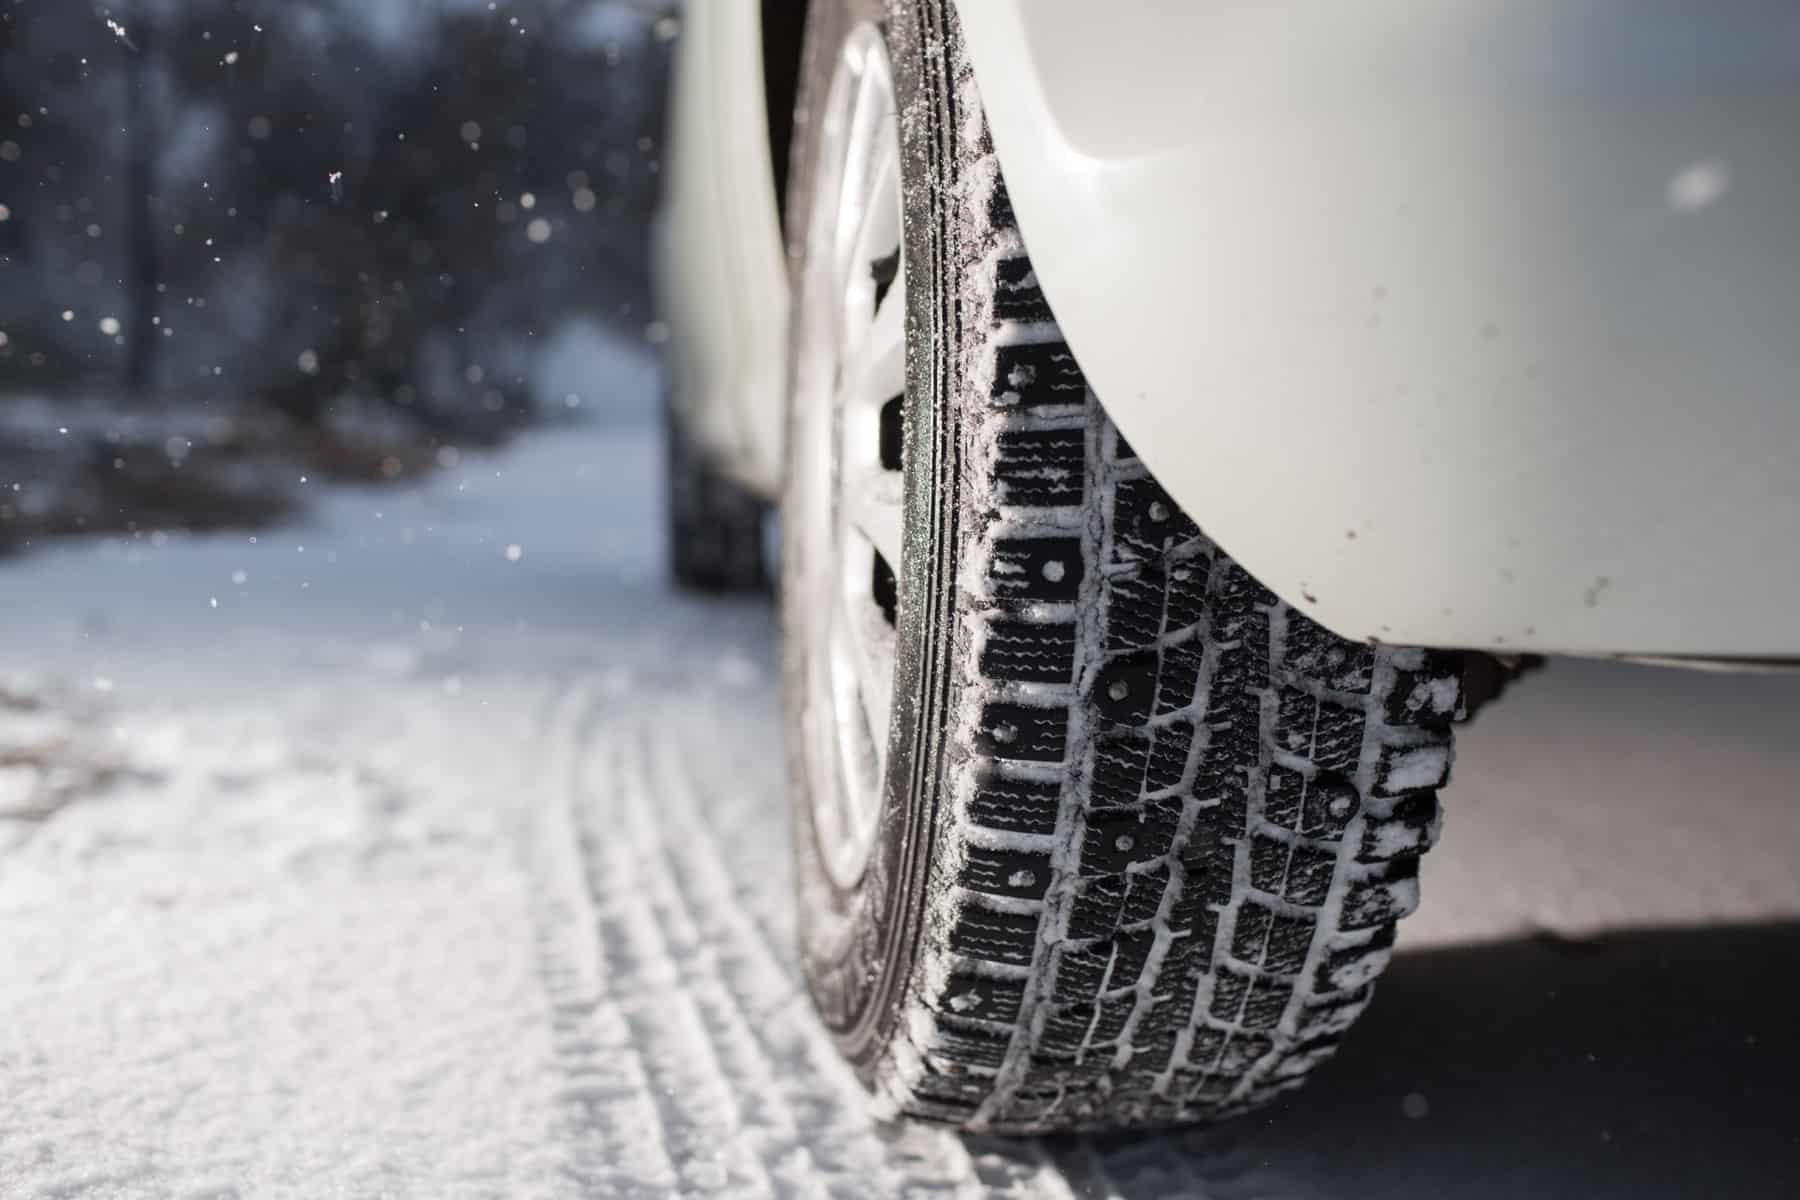 All Season vs. Snow vs. Studded Tires